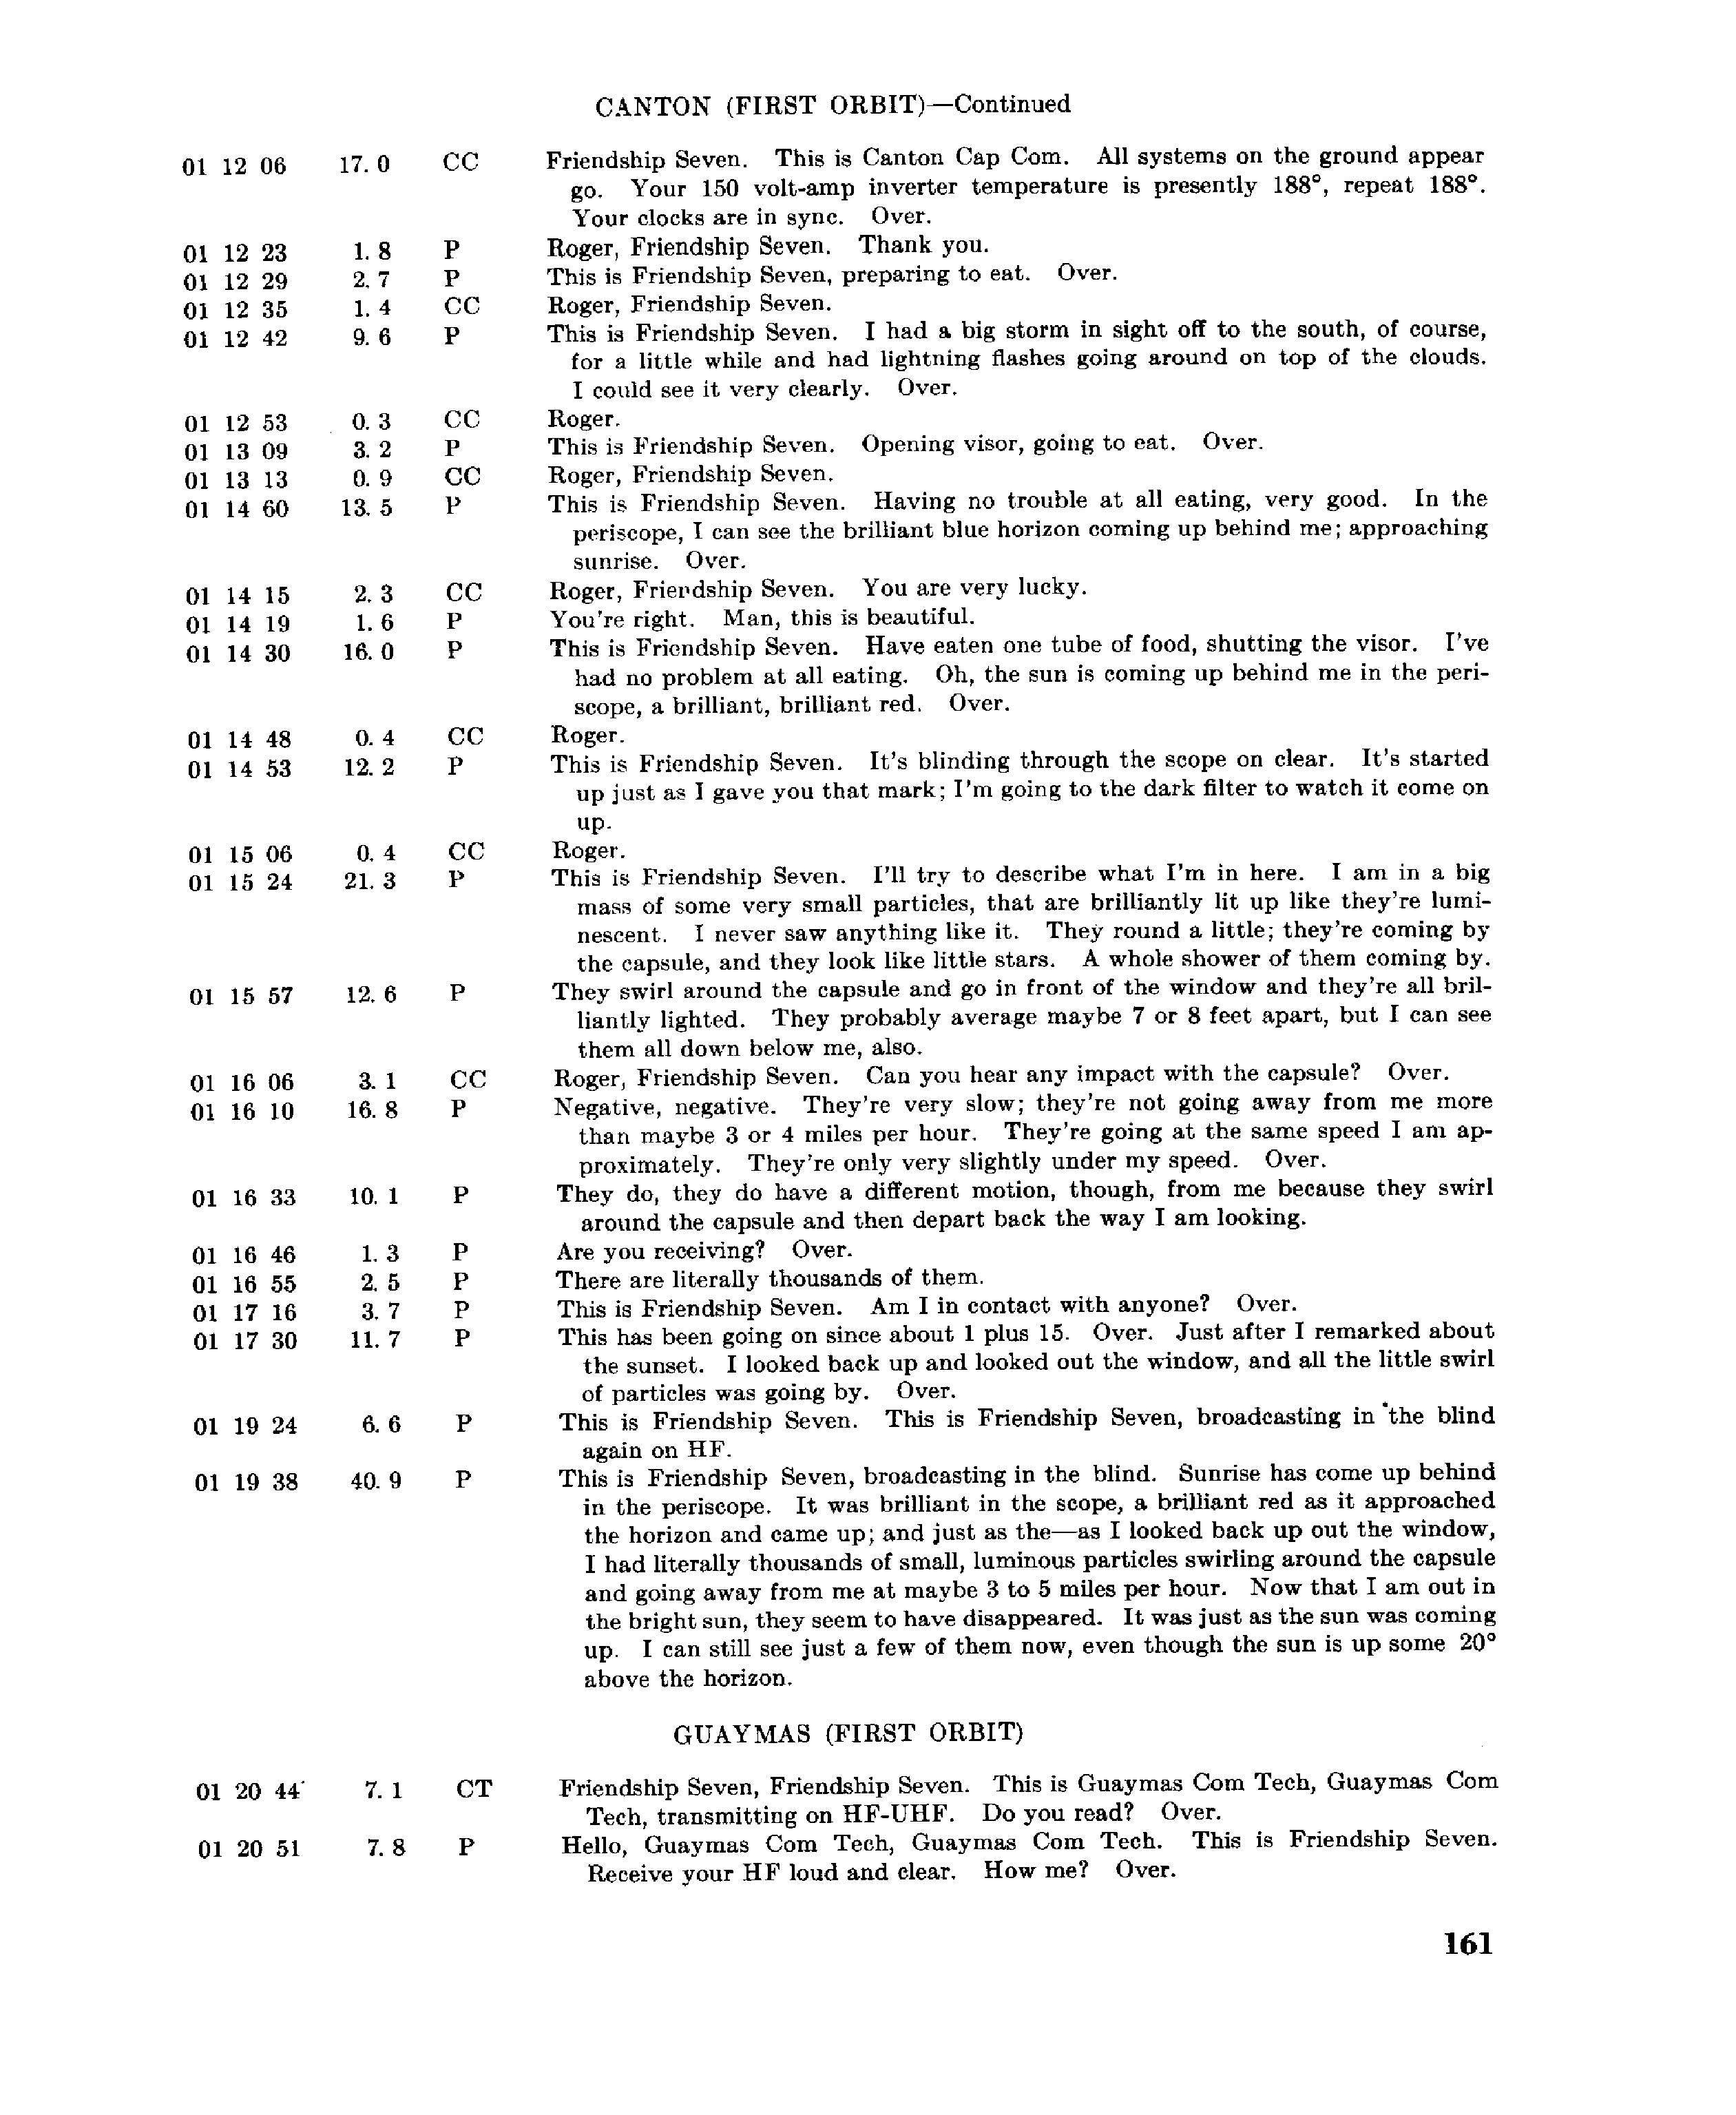 Page 160 of Mercury 6’s original transcript